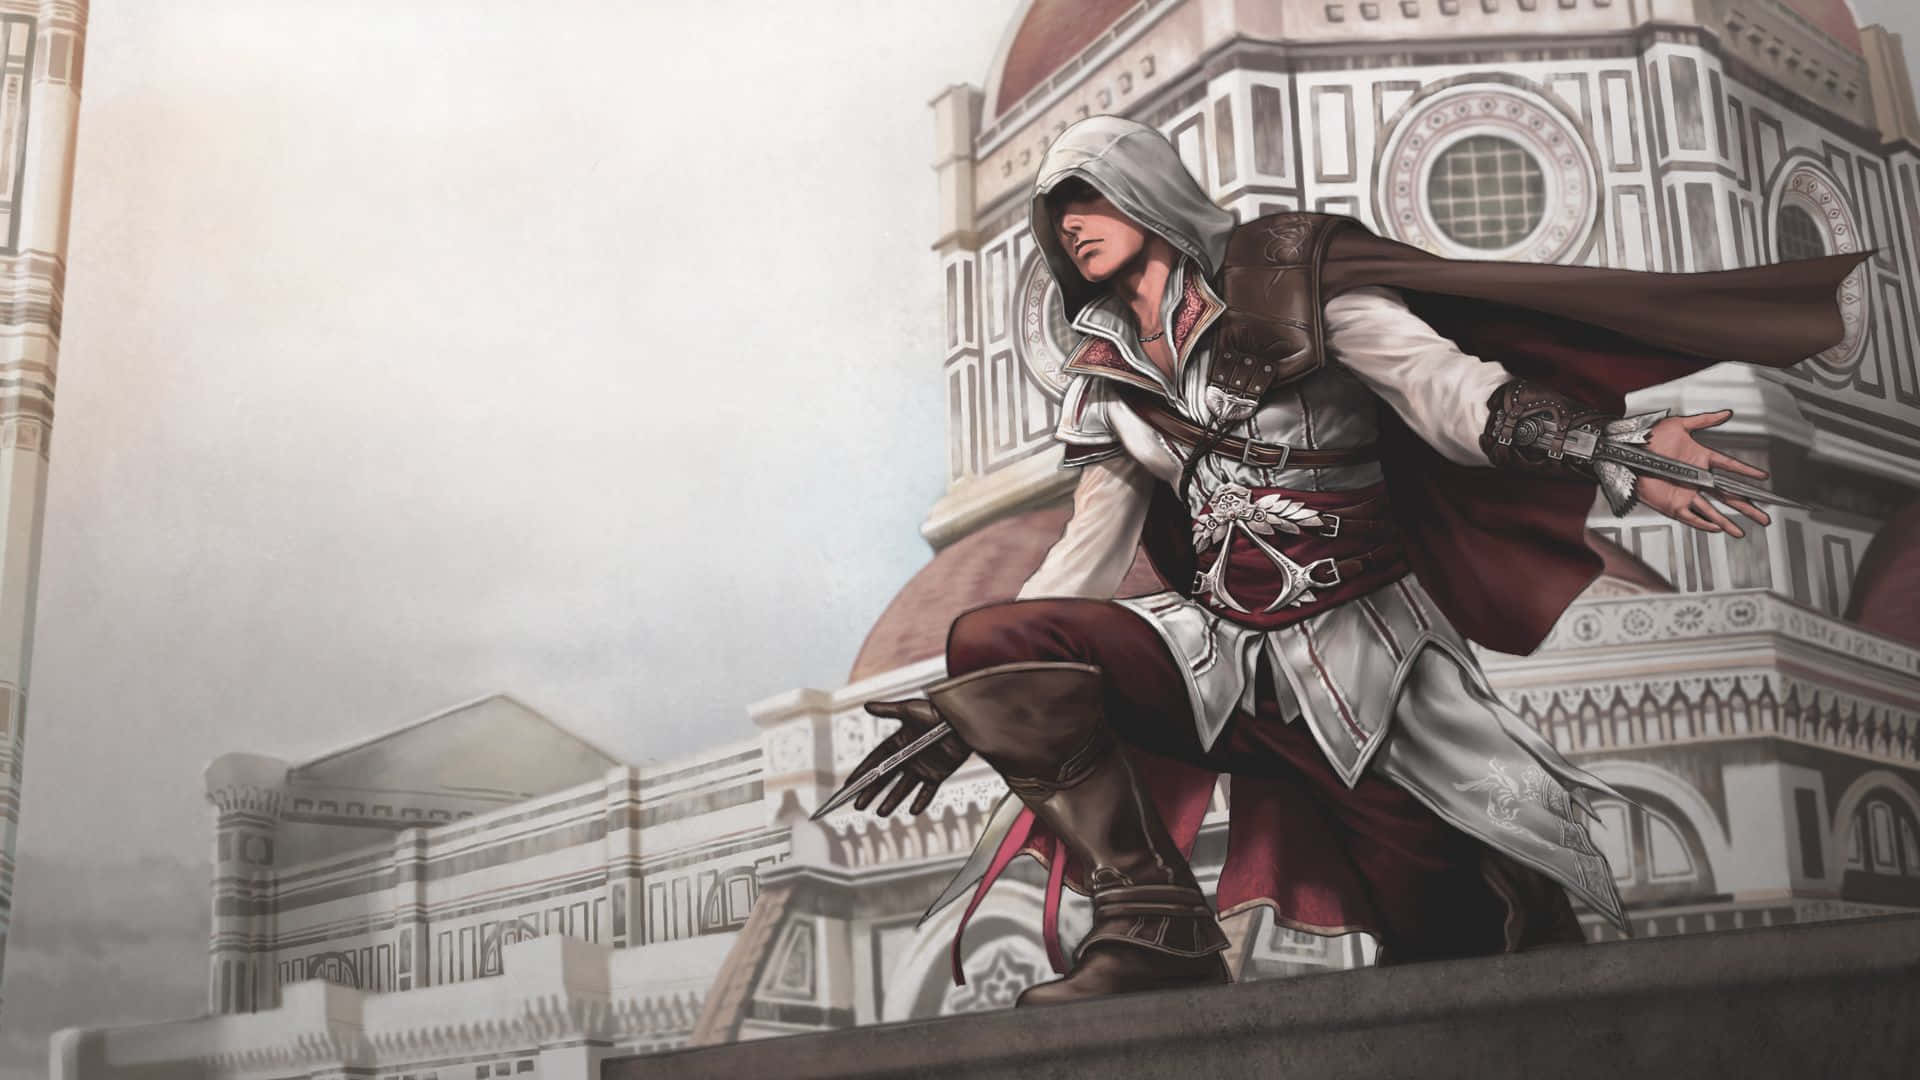 Assassin's Creed Ezio - The Master Assassin in Action Wallpaper